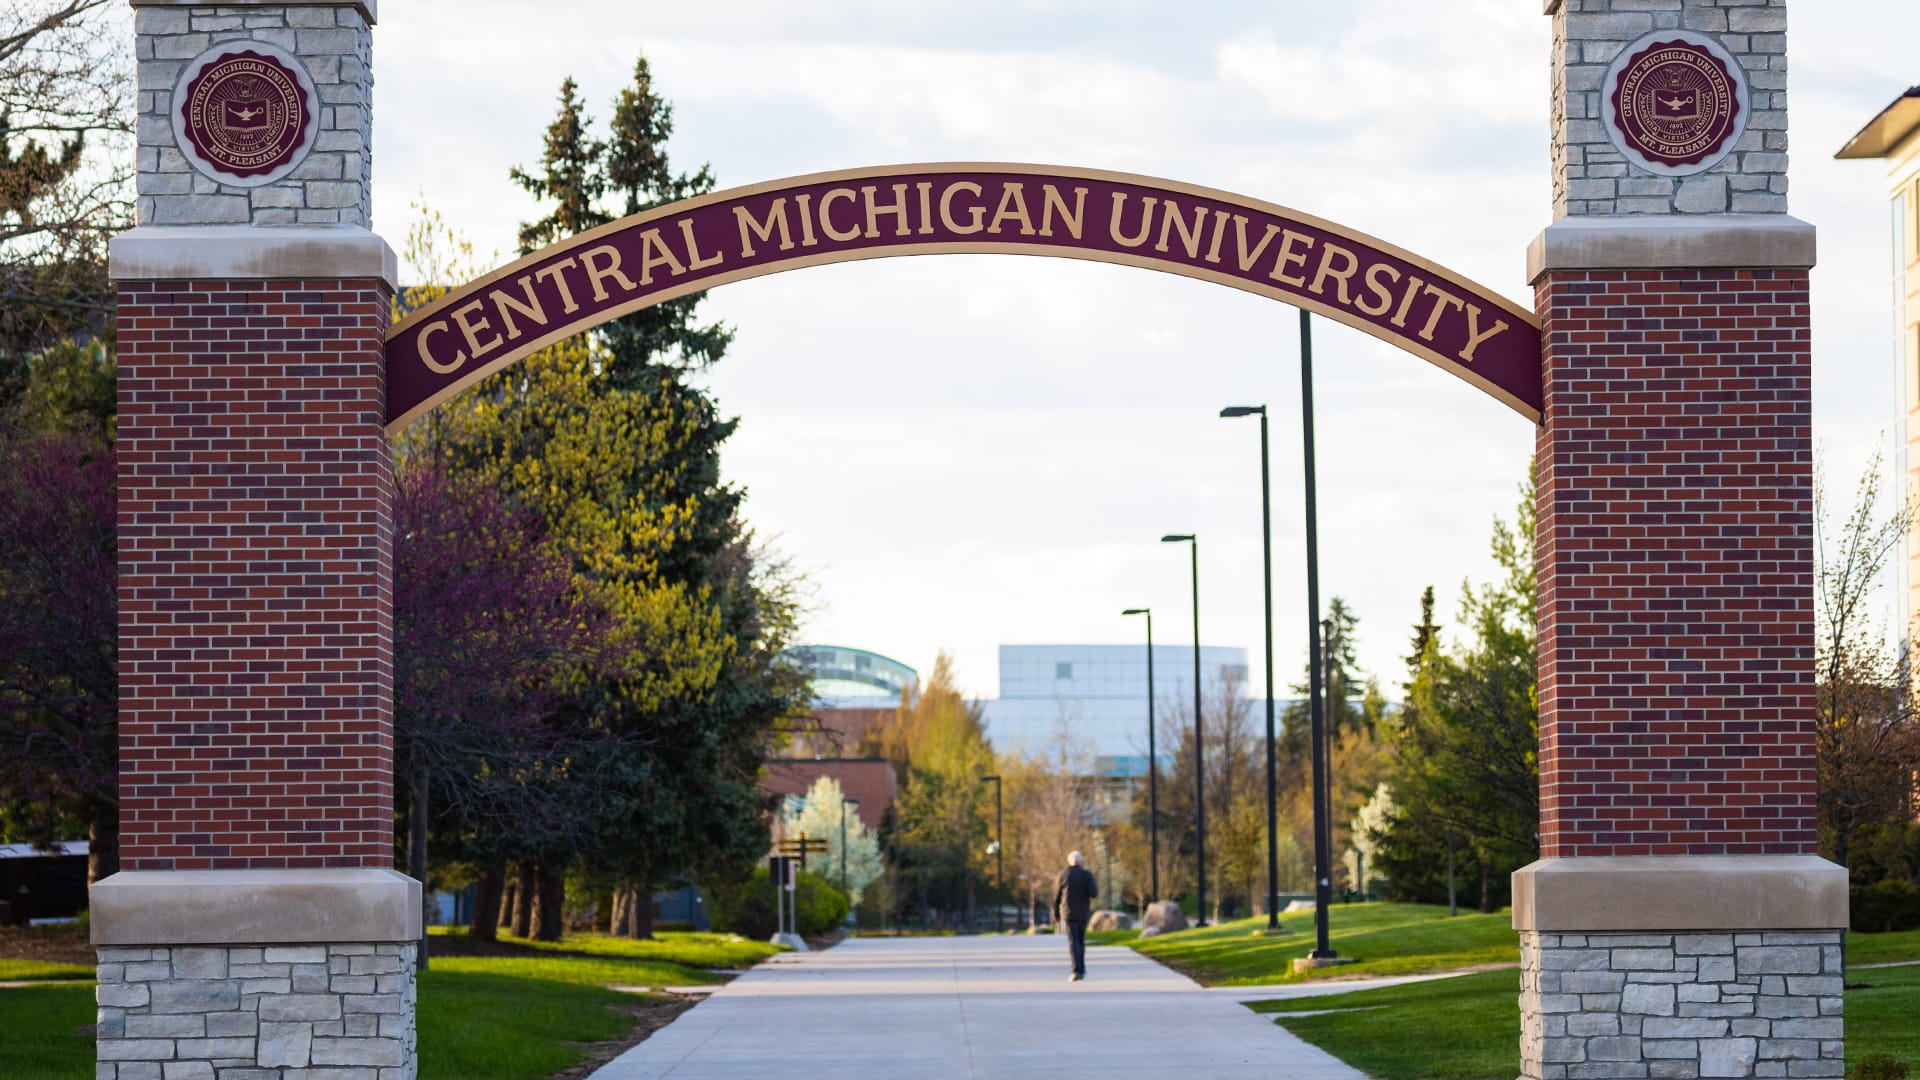 Central Michigan University gateway